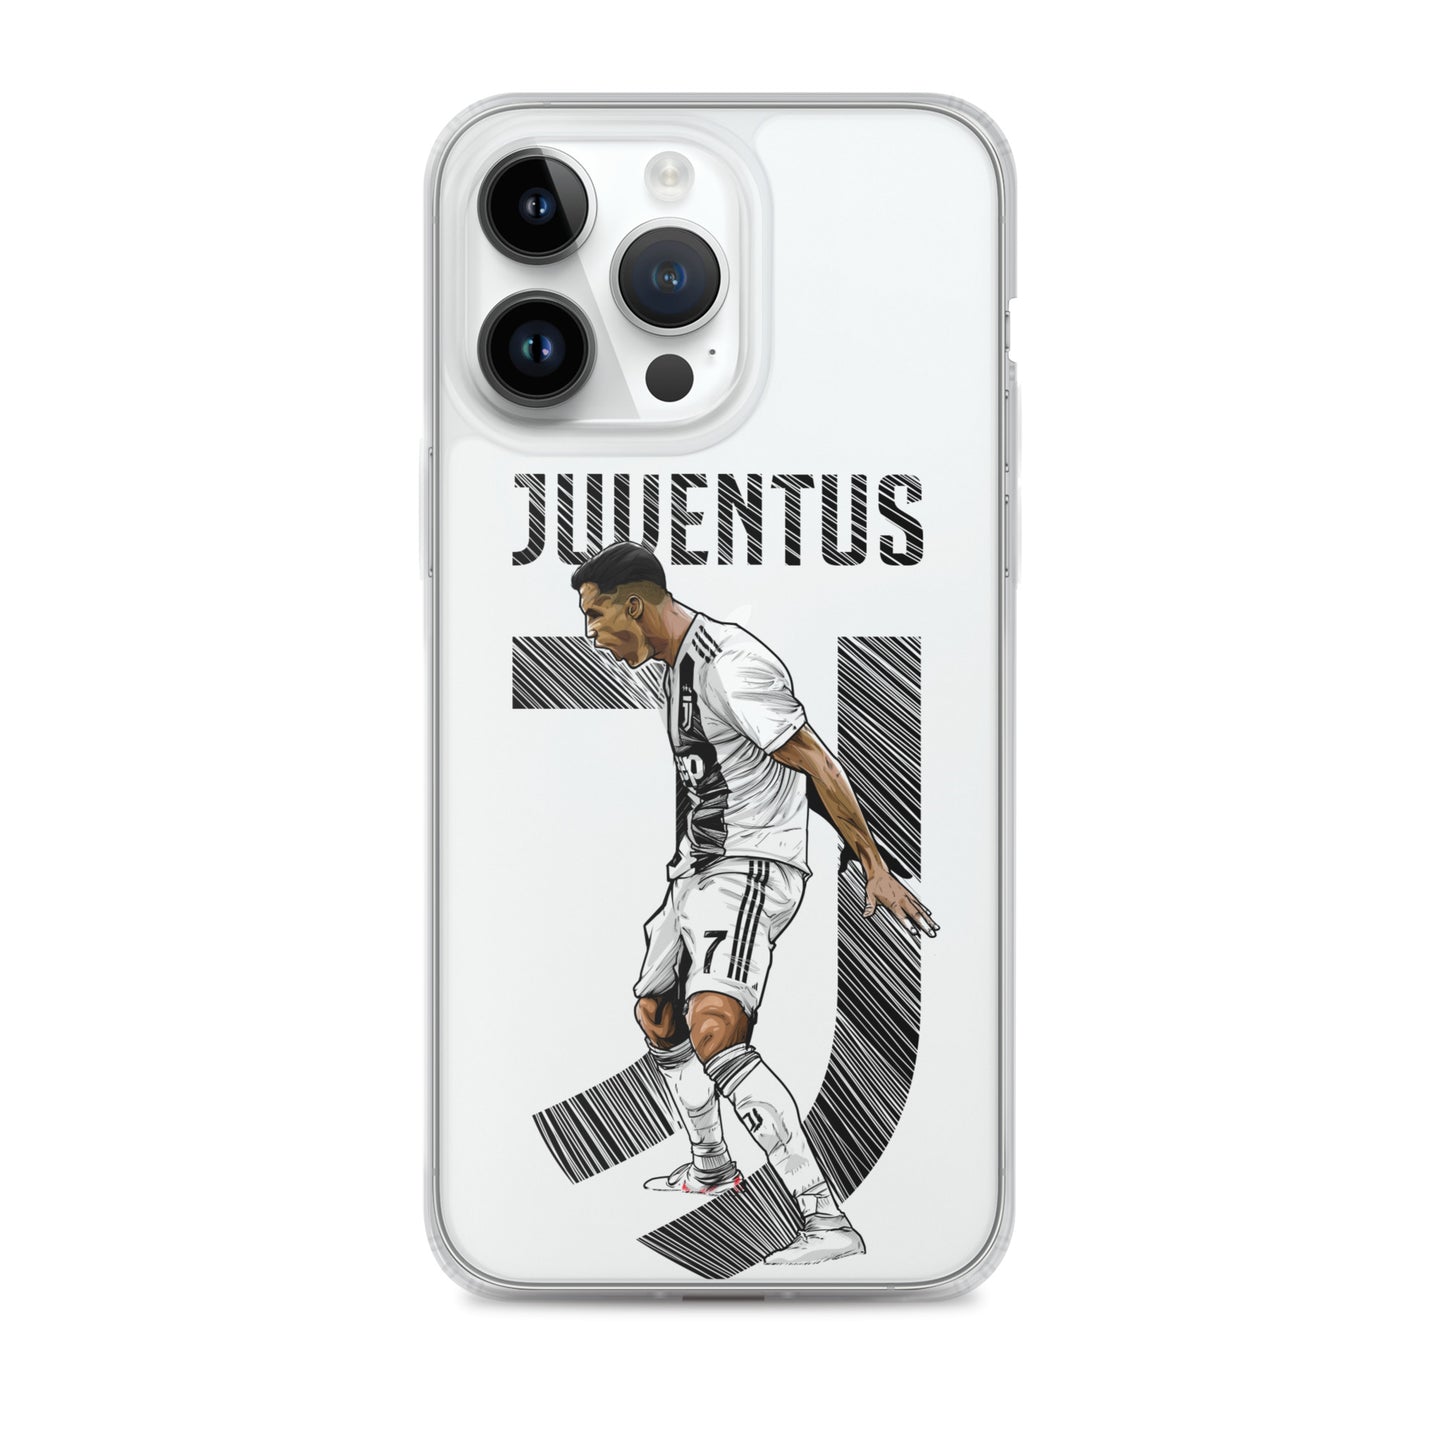 CR7 Juventus Siuu iPhone Case - The 90+ Minute